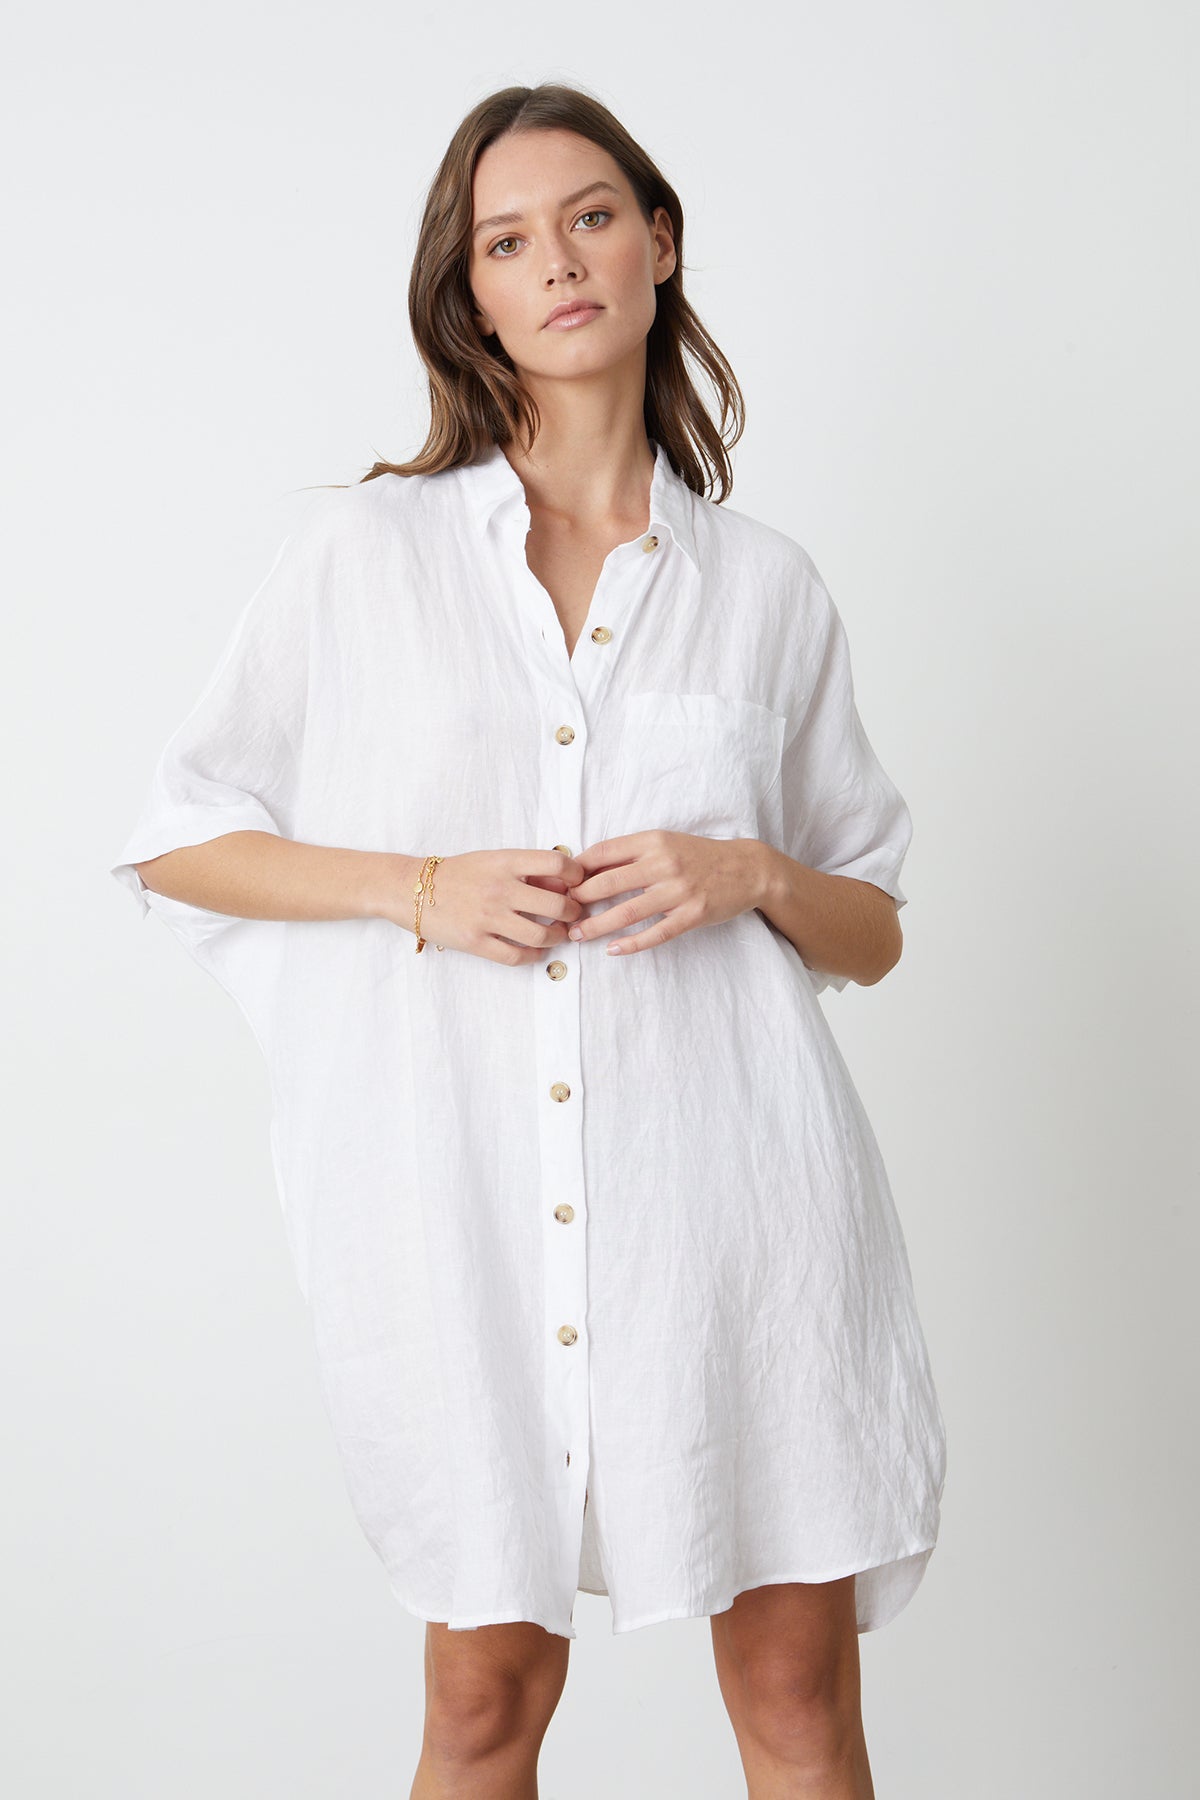   A model wearing a white STEVIE LINEN BUTTON-UP DRESS by Velvet by Graham & Spencer. 